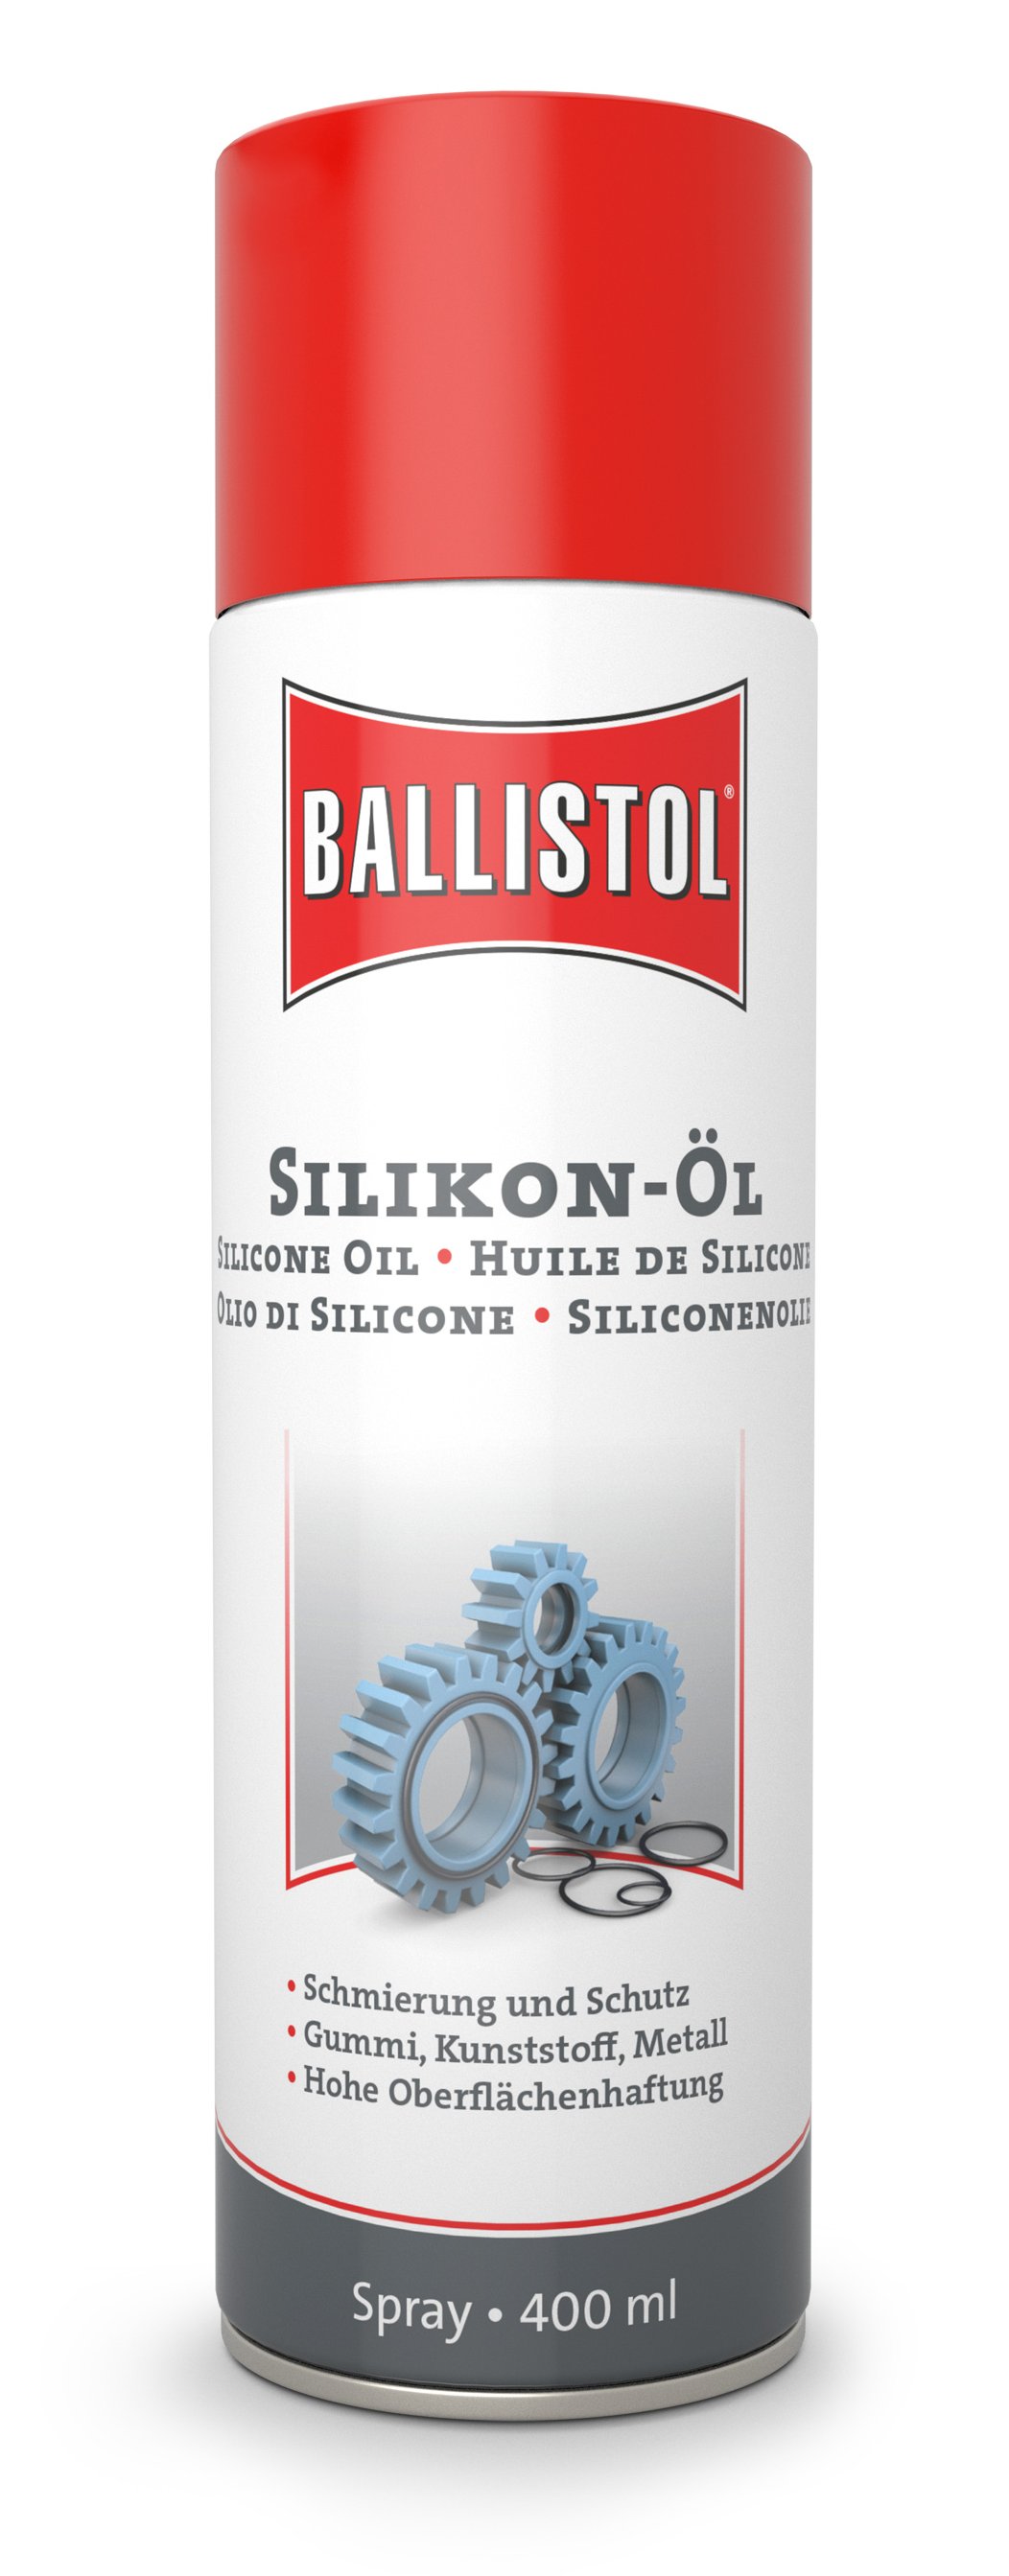 BALLISTOL Silikon-Öl - Silikonspray, 400ml